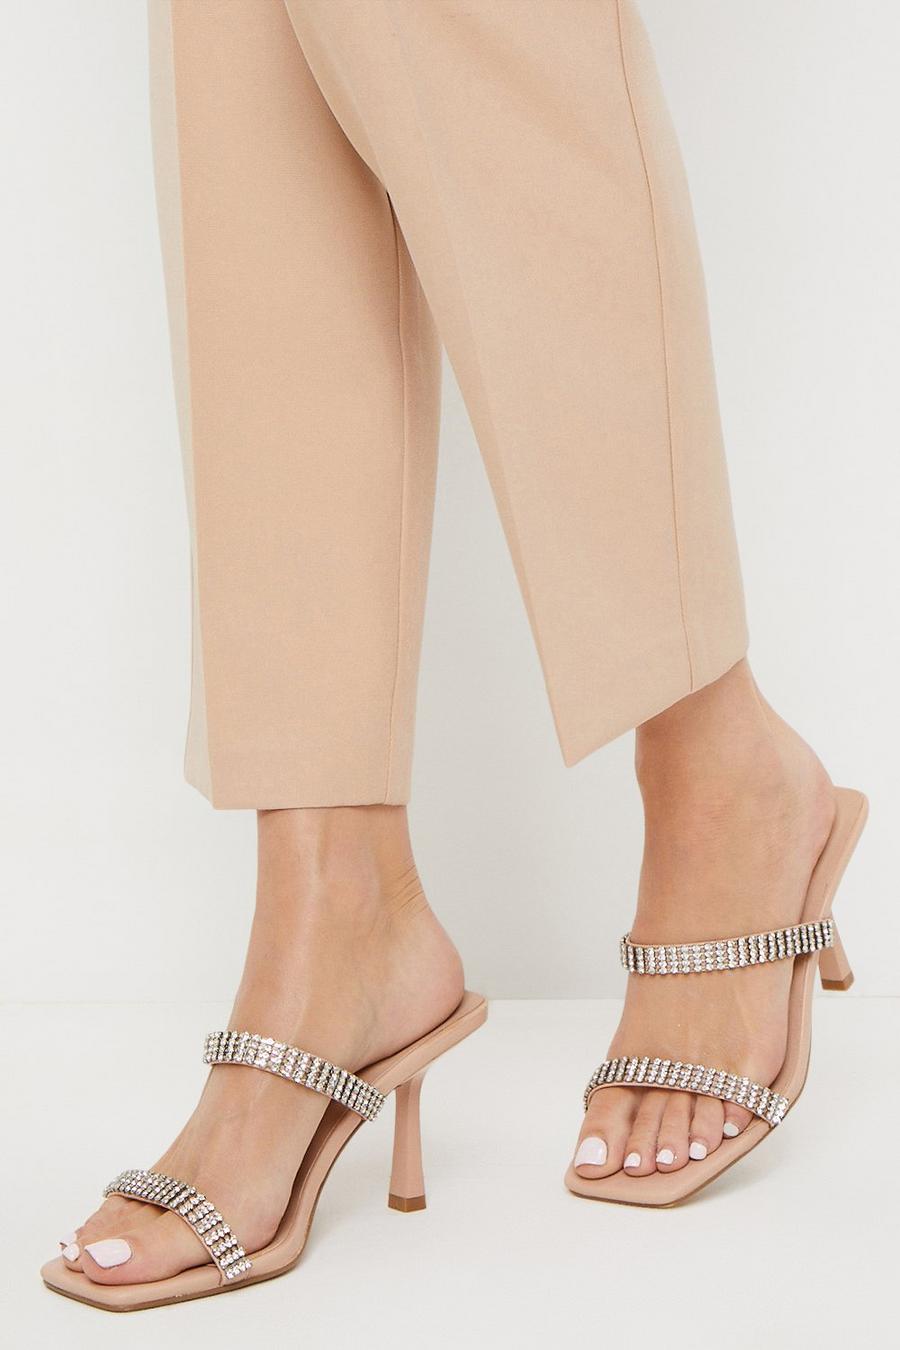 Gianna Double Strap Diamante Heeled Sandals